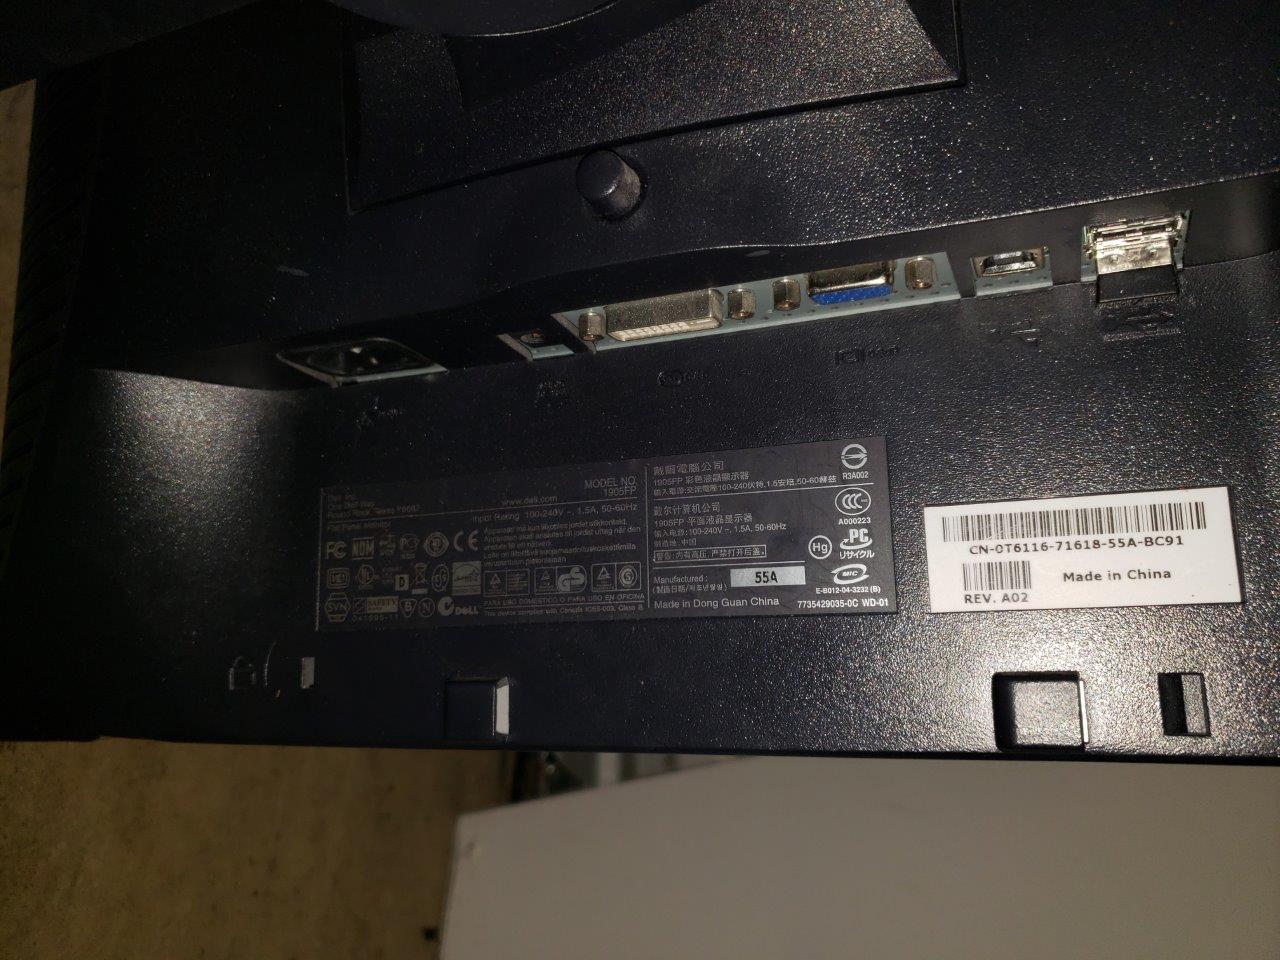 19" Dell 1905FP DVI/VGA LCD Monitor w/USB (Silver/Black)